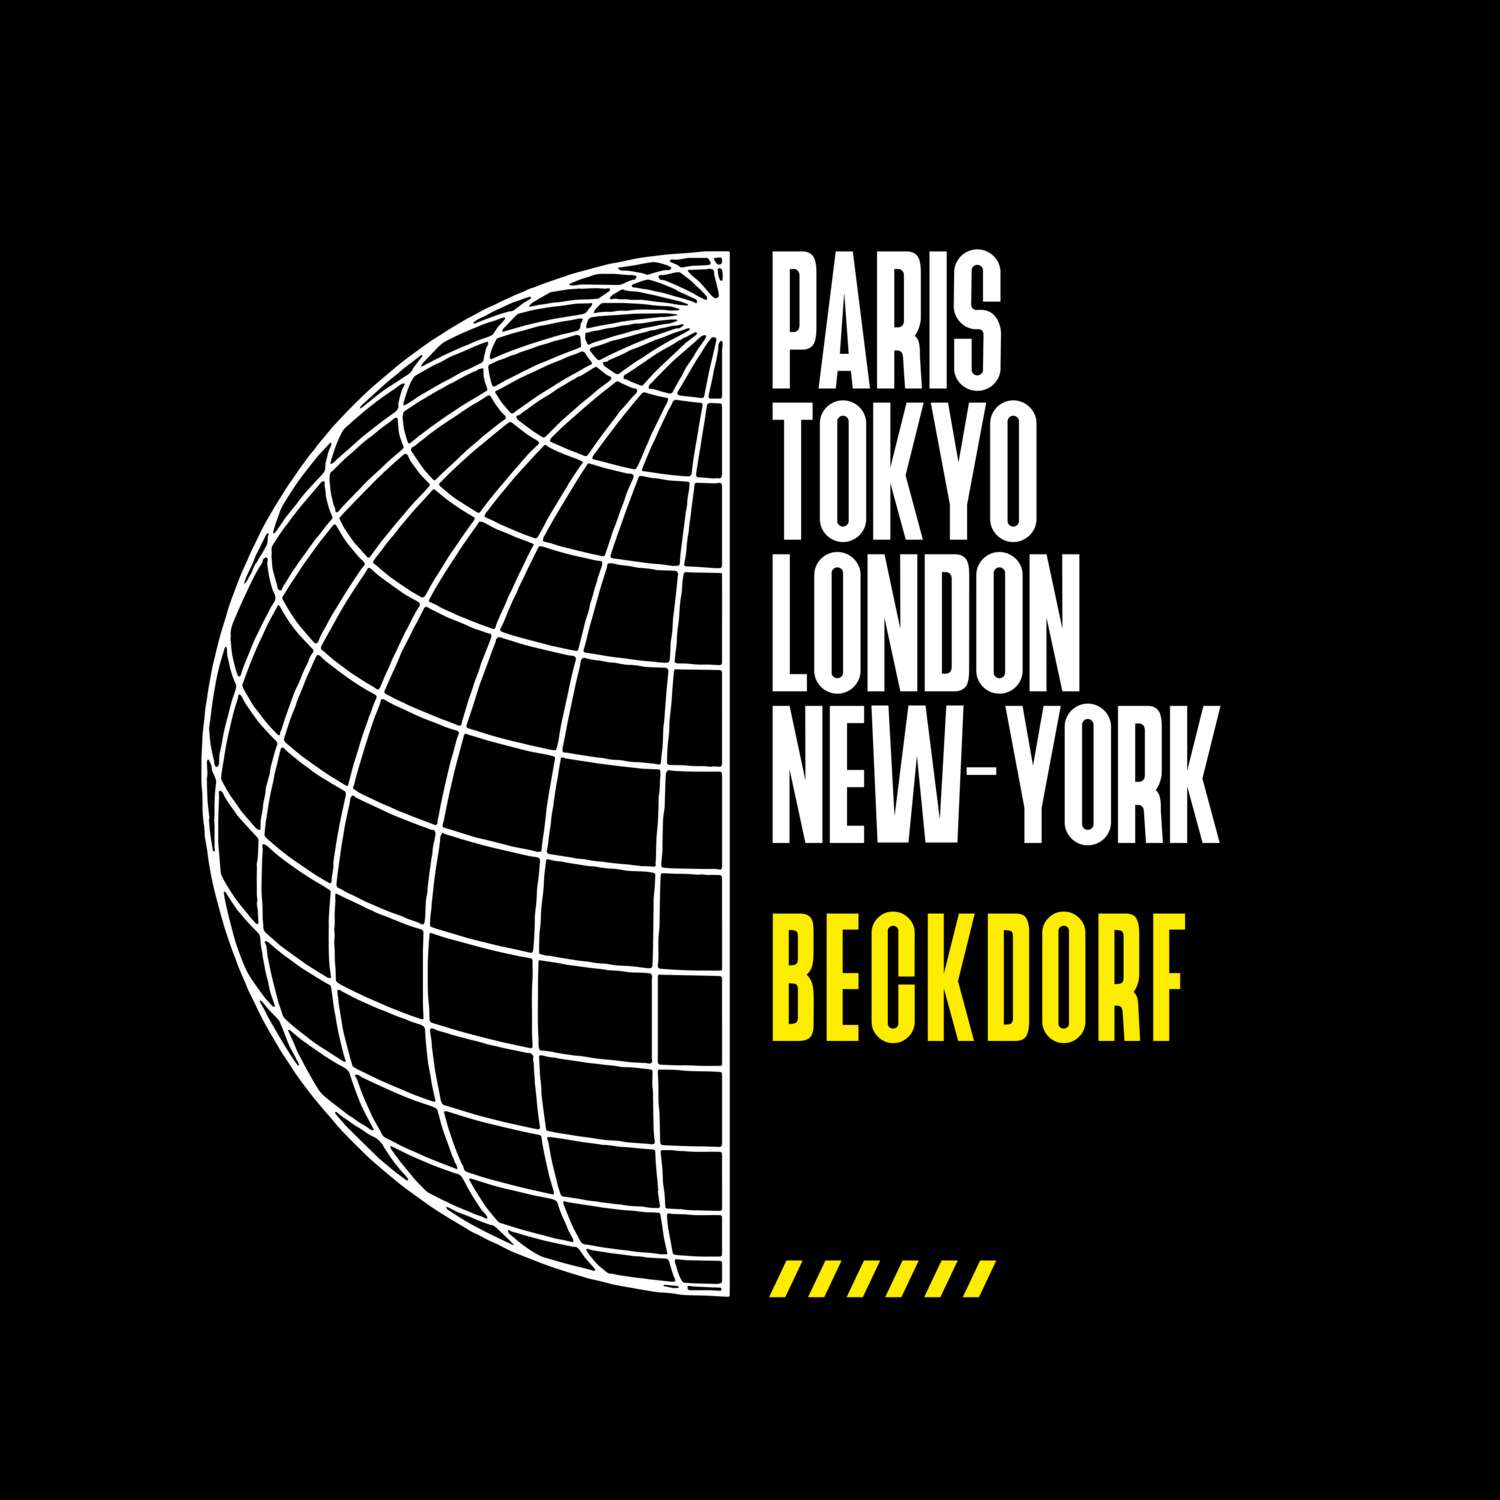 Beckdorf T-Shirt »Paris Tokyo London«